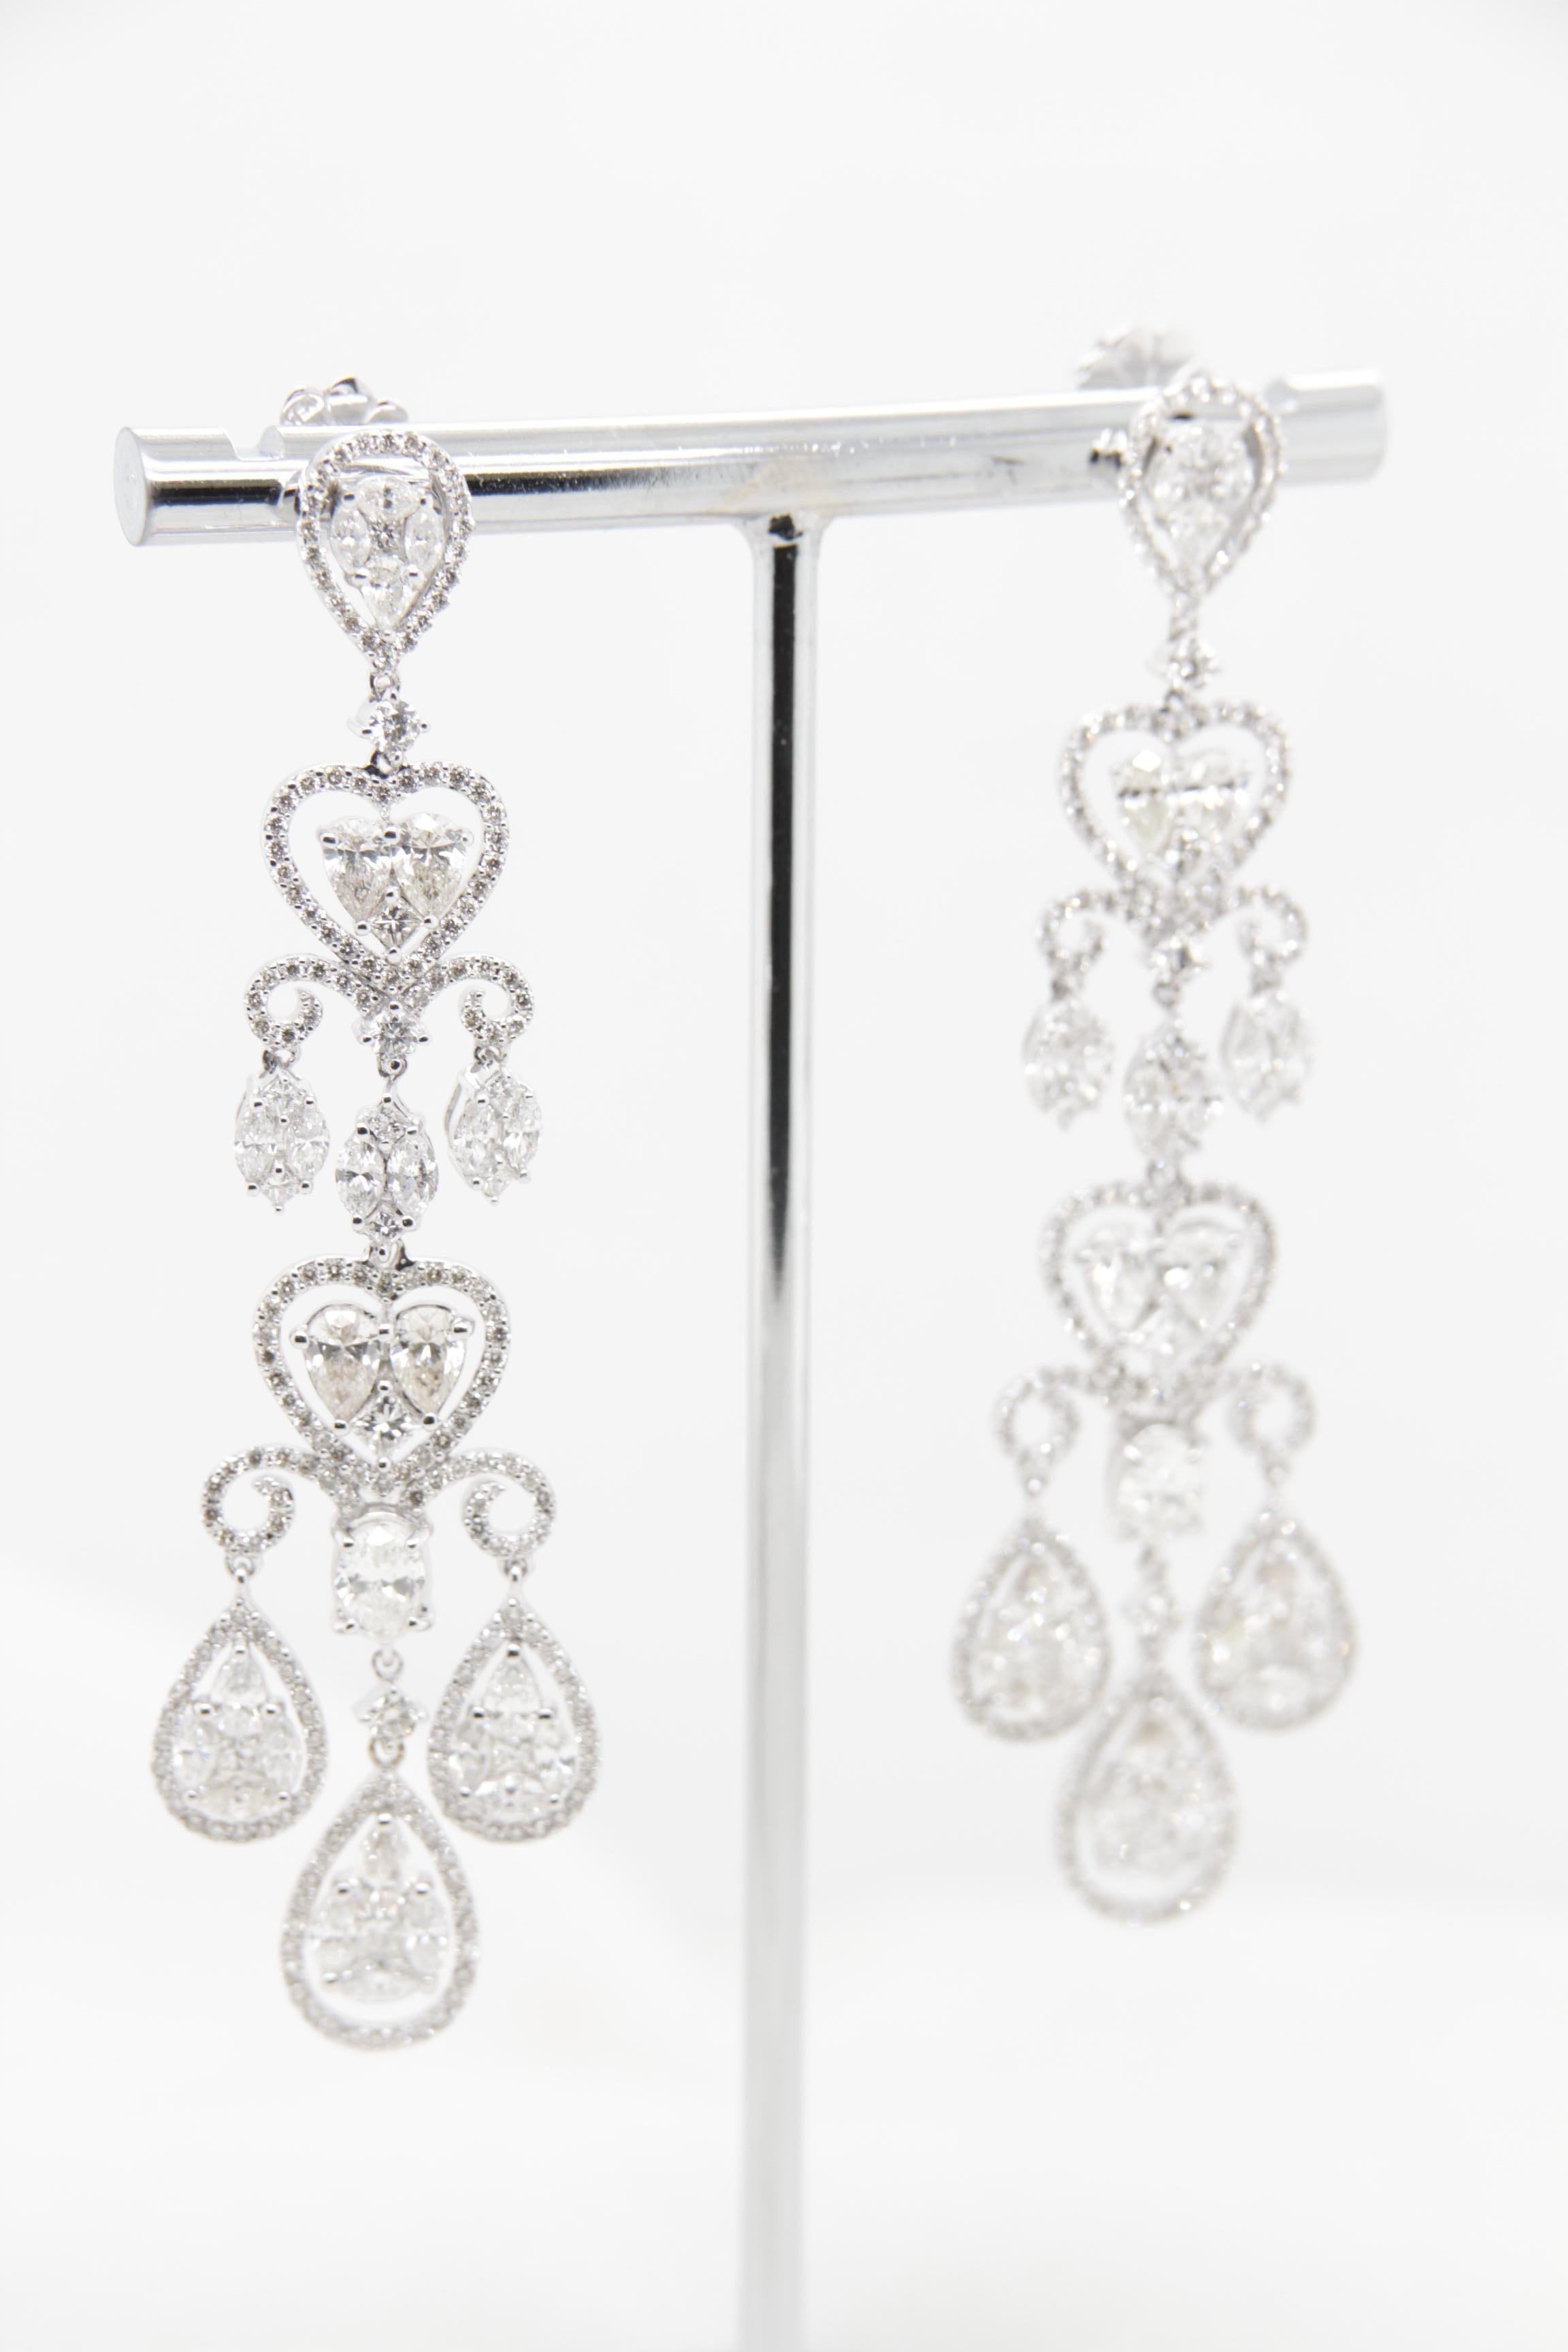 .10 carat diamond earrings